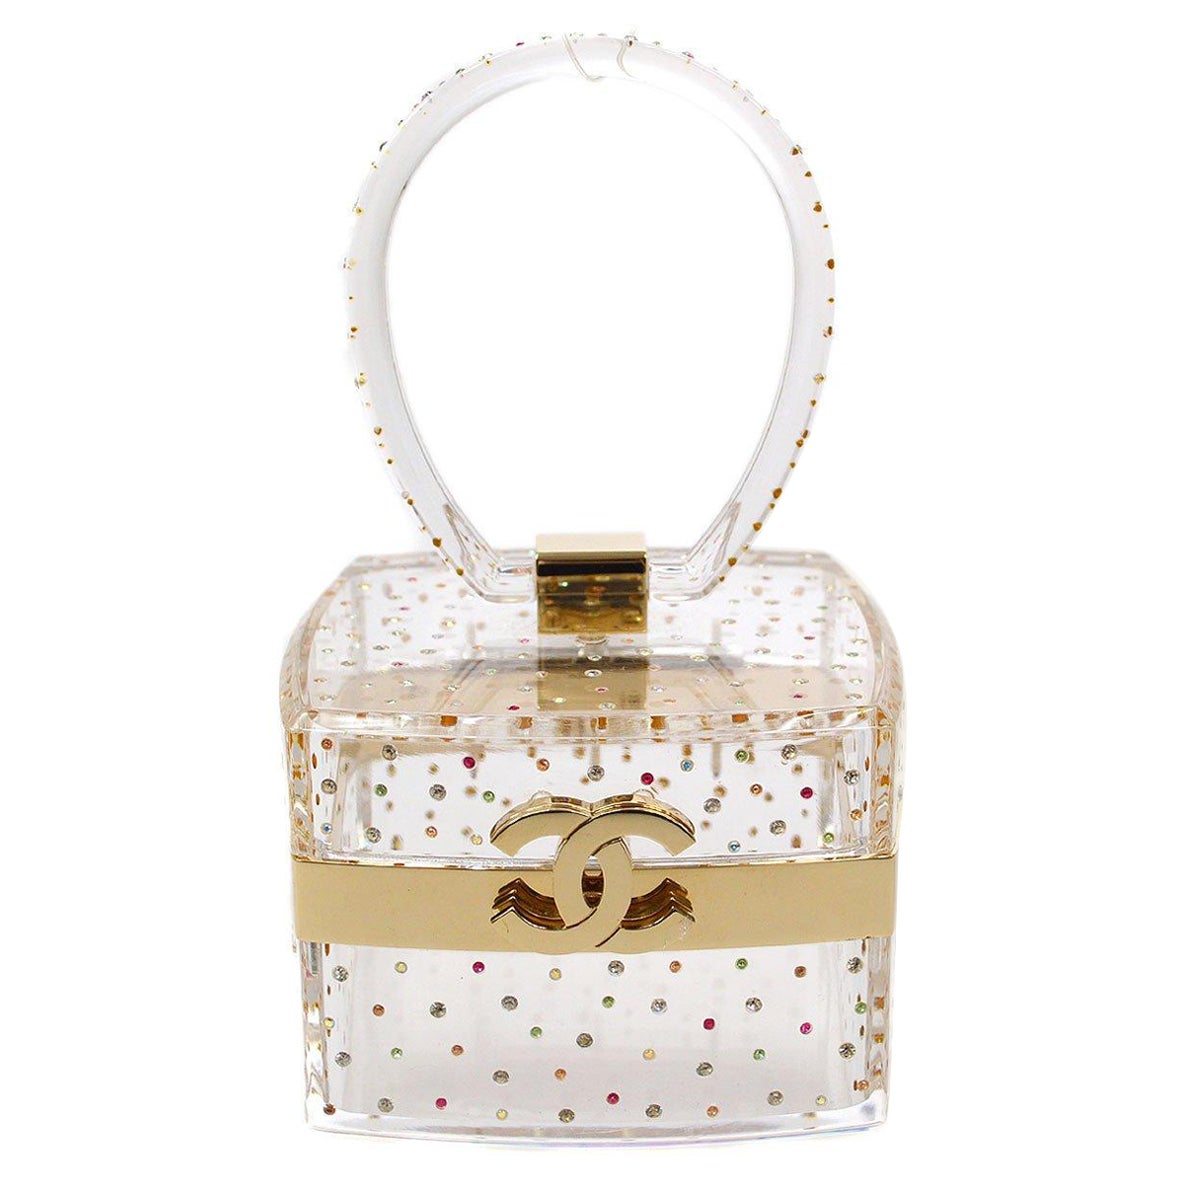 Chanel Beaded Bag - 24 For Sale on 1stDibs